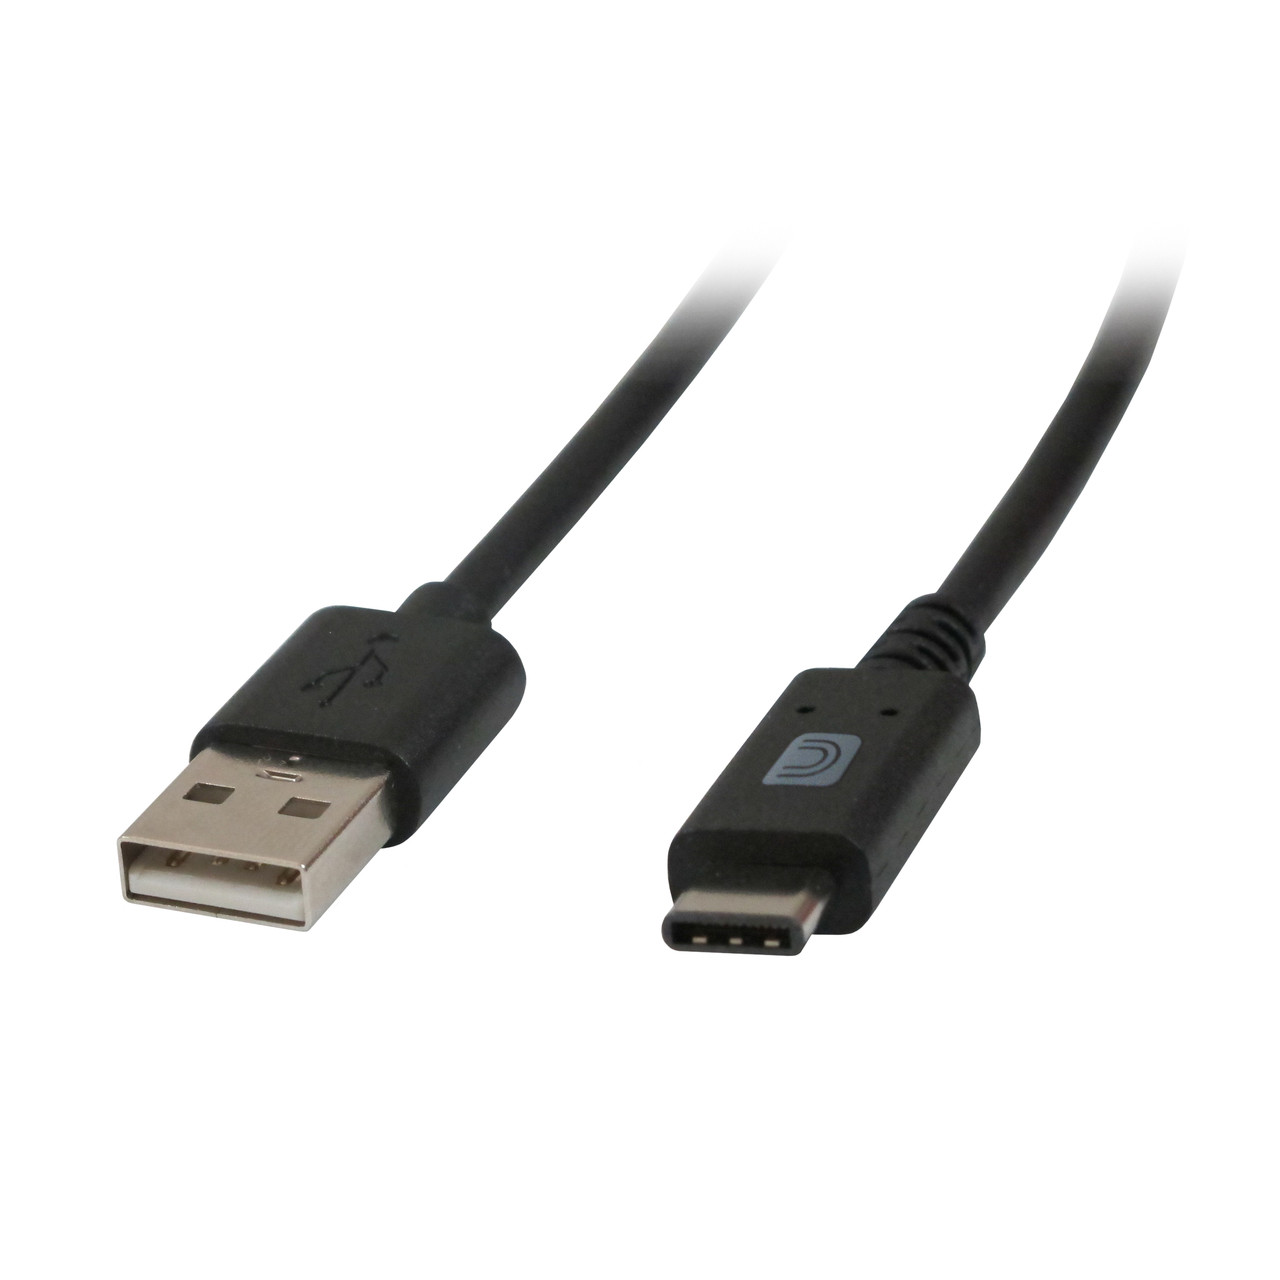 Usb 3.2 gen 1 type a. Юсб тайп би. Кабель USB 2.0 A x2 to USB 2.0 B. Кабель USB 3.2 Gen 2 Type-c. USB 3.1 Gen 2 переходник.